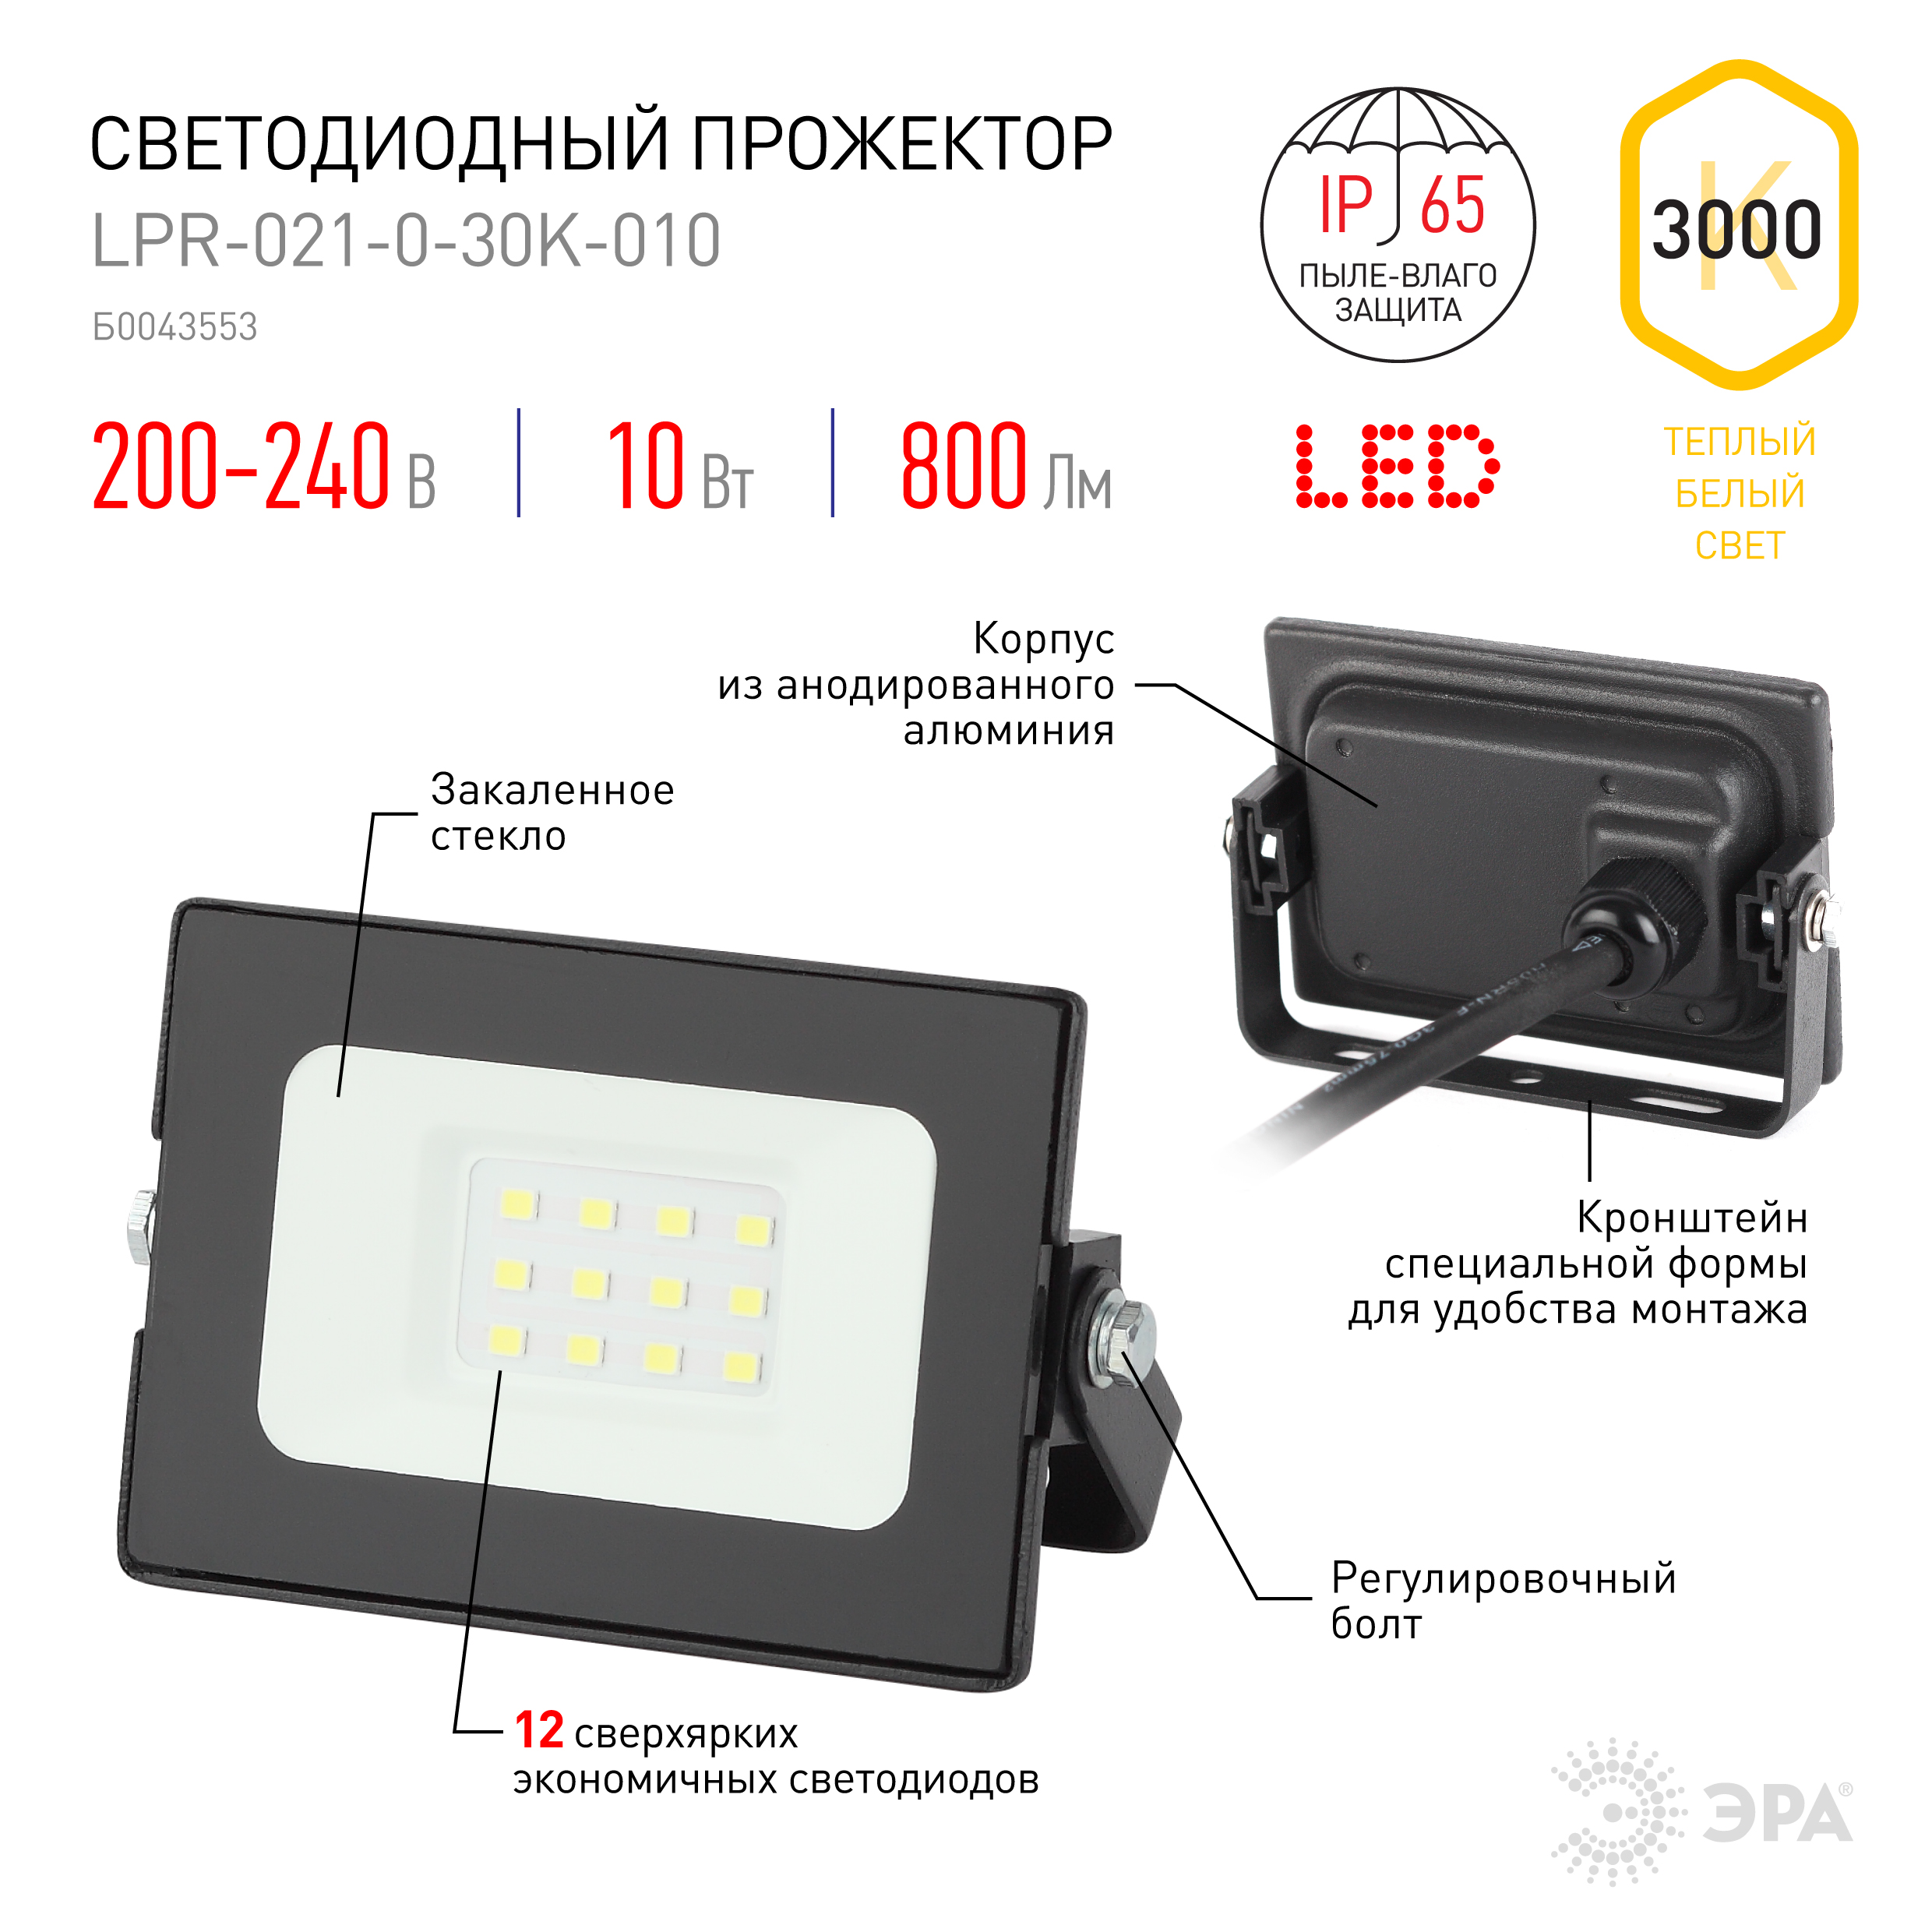 Прожектор светодиодный уличный ЭРА LPR-021-0-30K-010 10Вт 3000К 800Лм 95х62х35